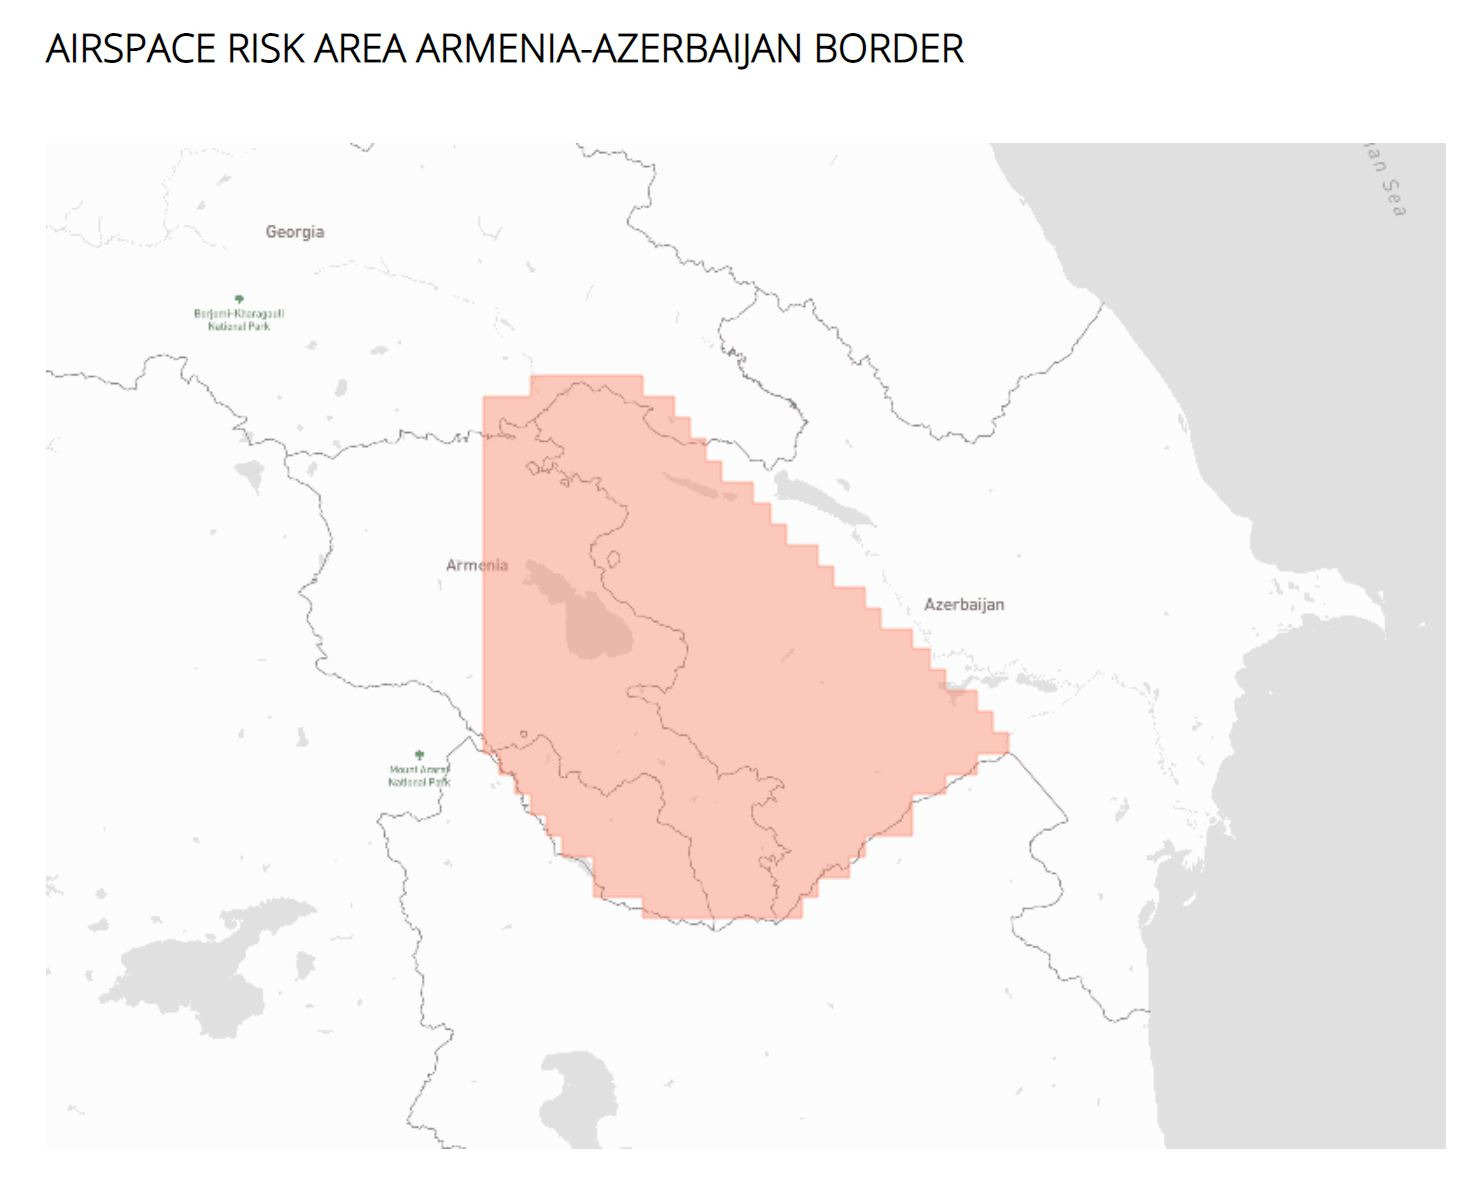 Airspace risk area Armenia-Azerbaijan border